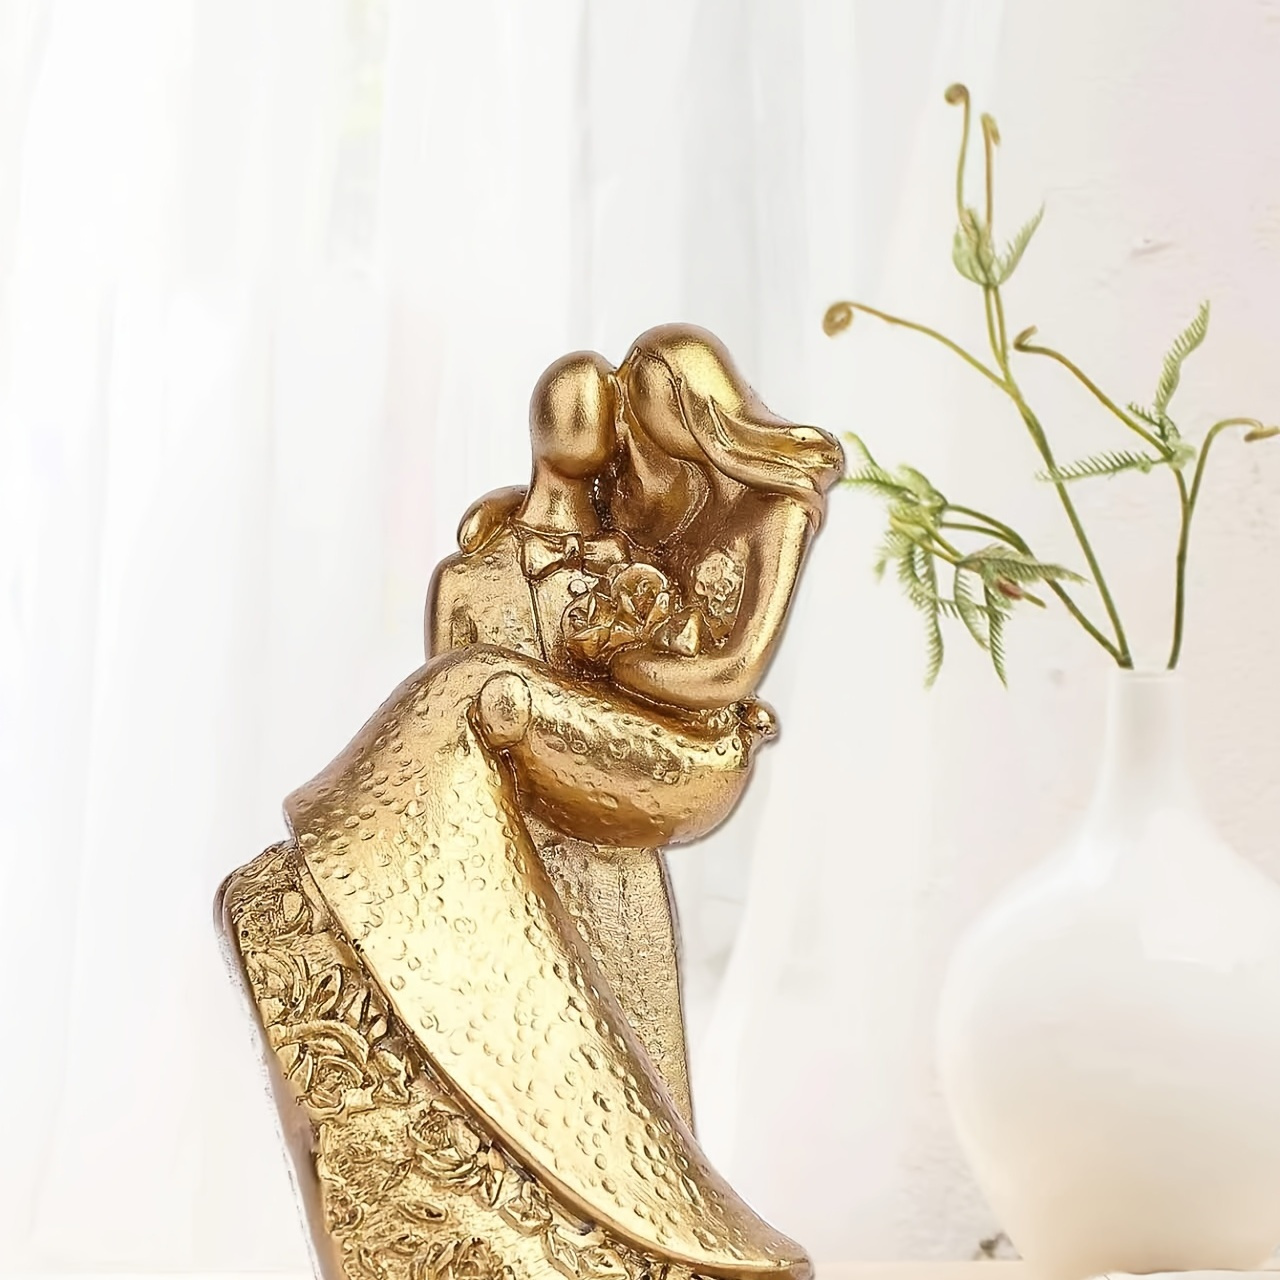 

1pc Romantic Couple Sculpture - Modern Resin Statue For Home Decor, Office Bookshelf, Wedding Party - Art Craft Ornament